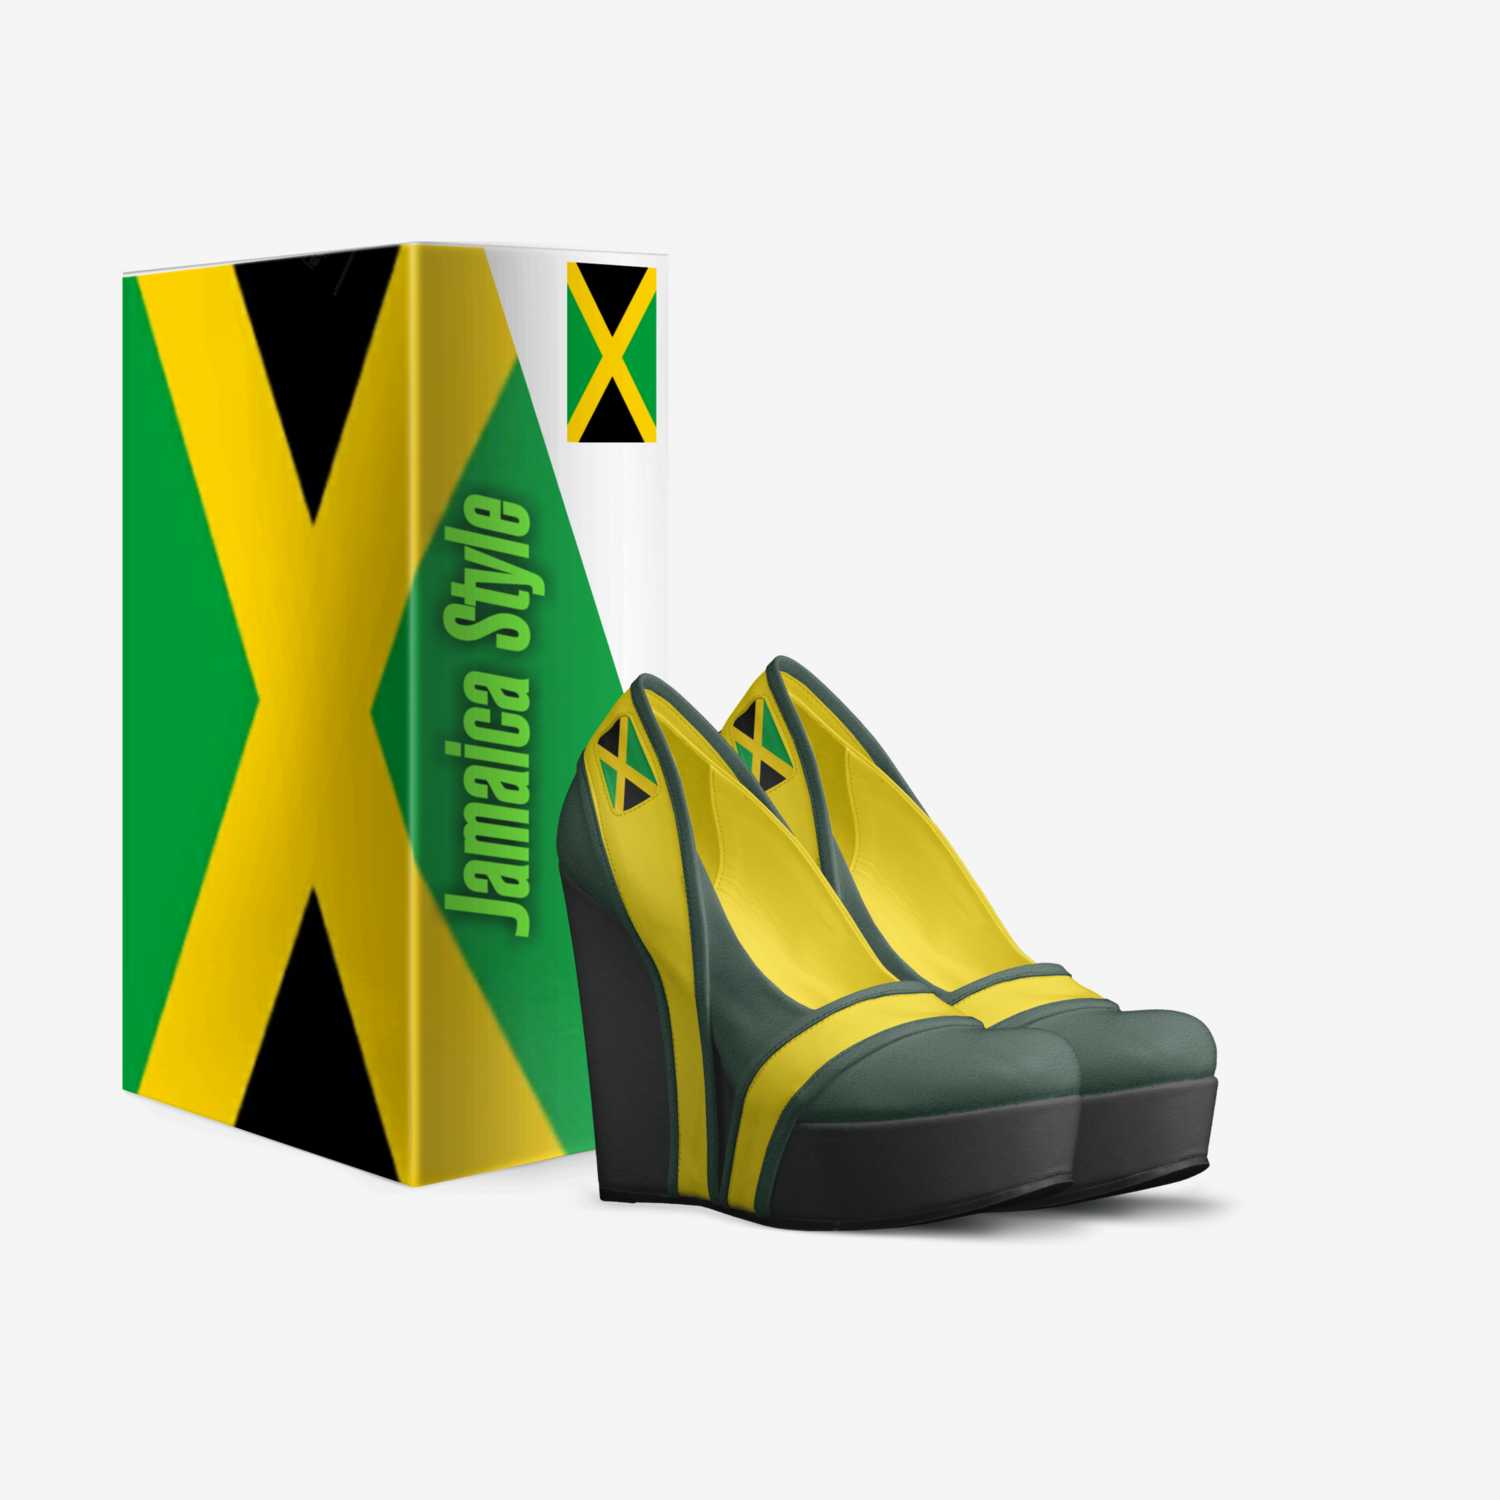 Jamaica She Mix custom made in Italy shoes by Natasha Robinson | Box view